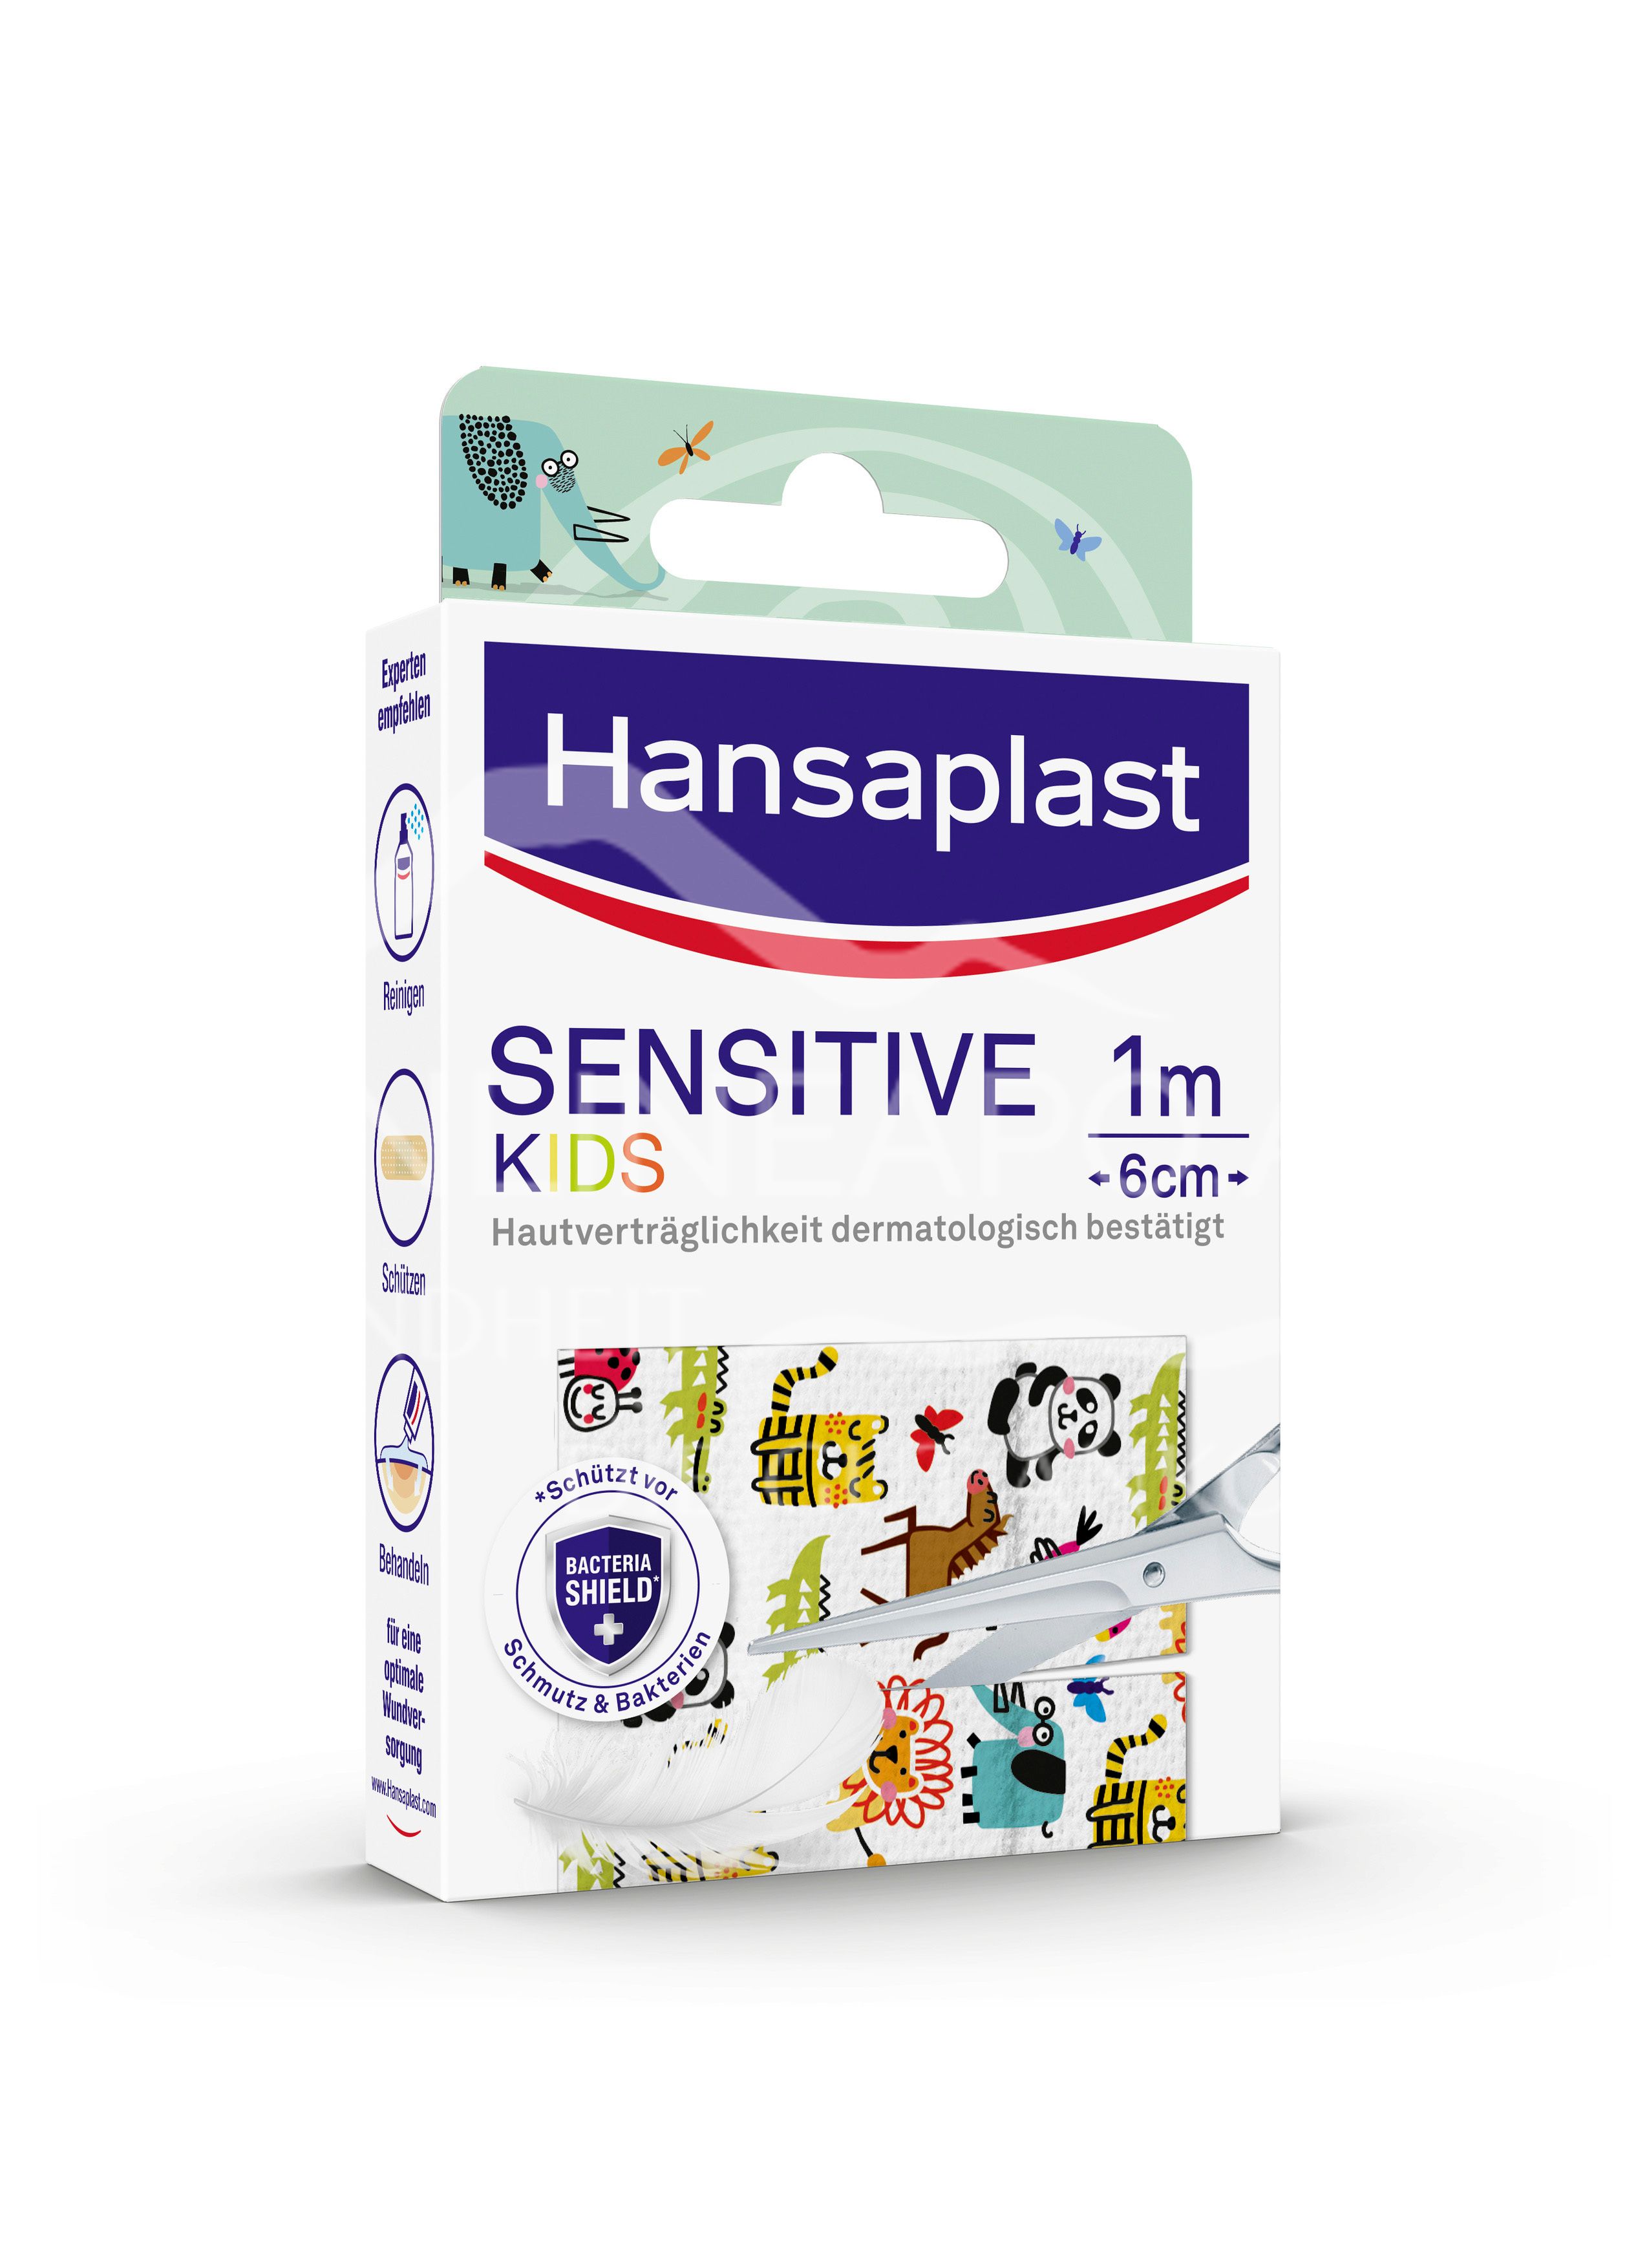 Hansaplast Kinderpflaster Sensitive 6cm x 1m